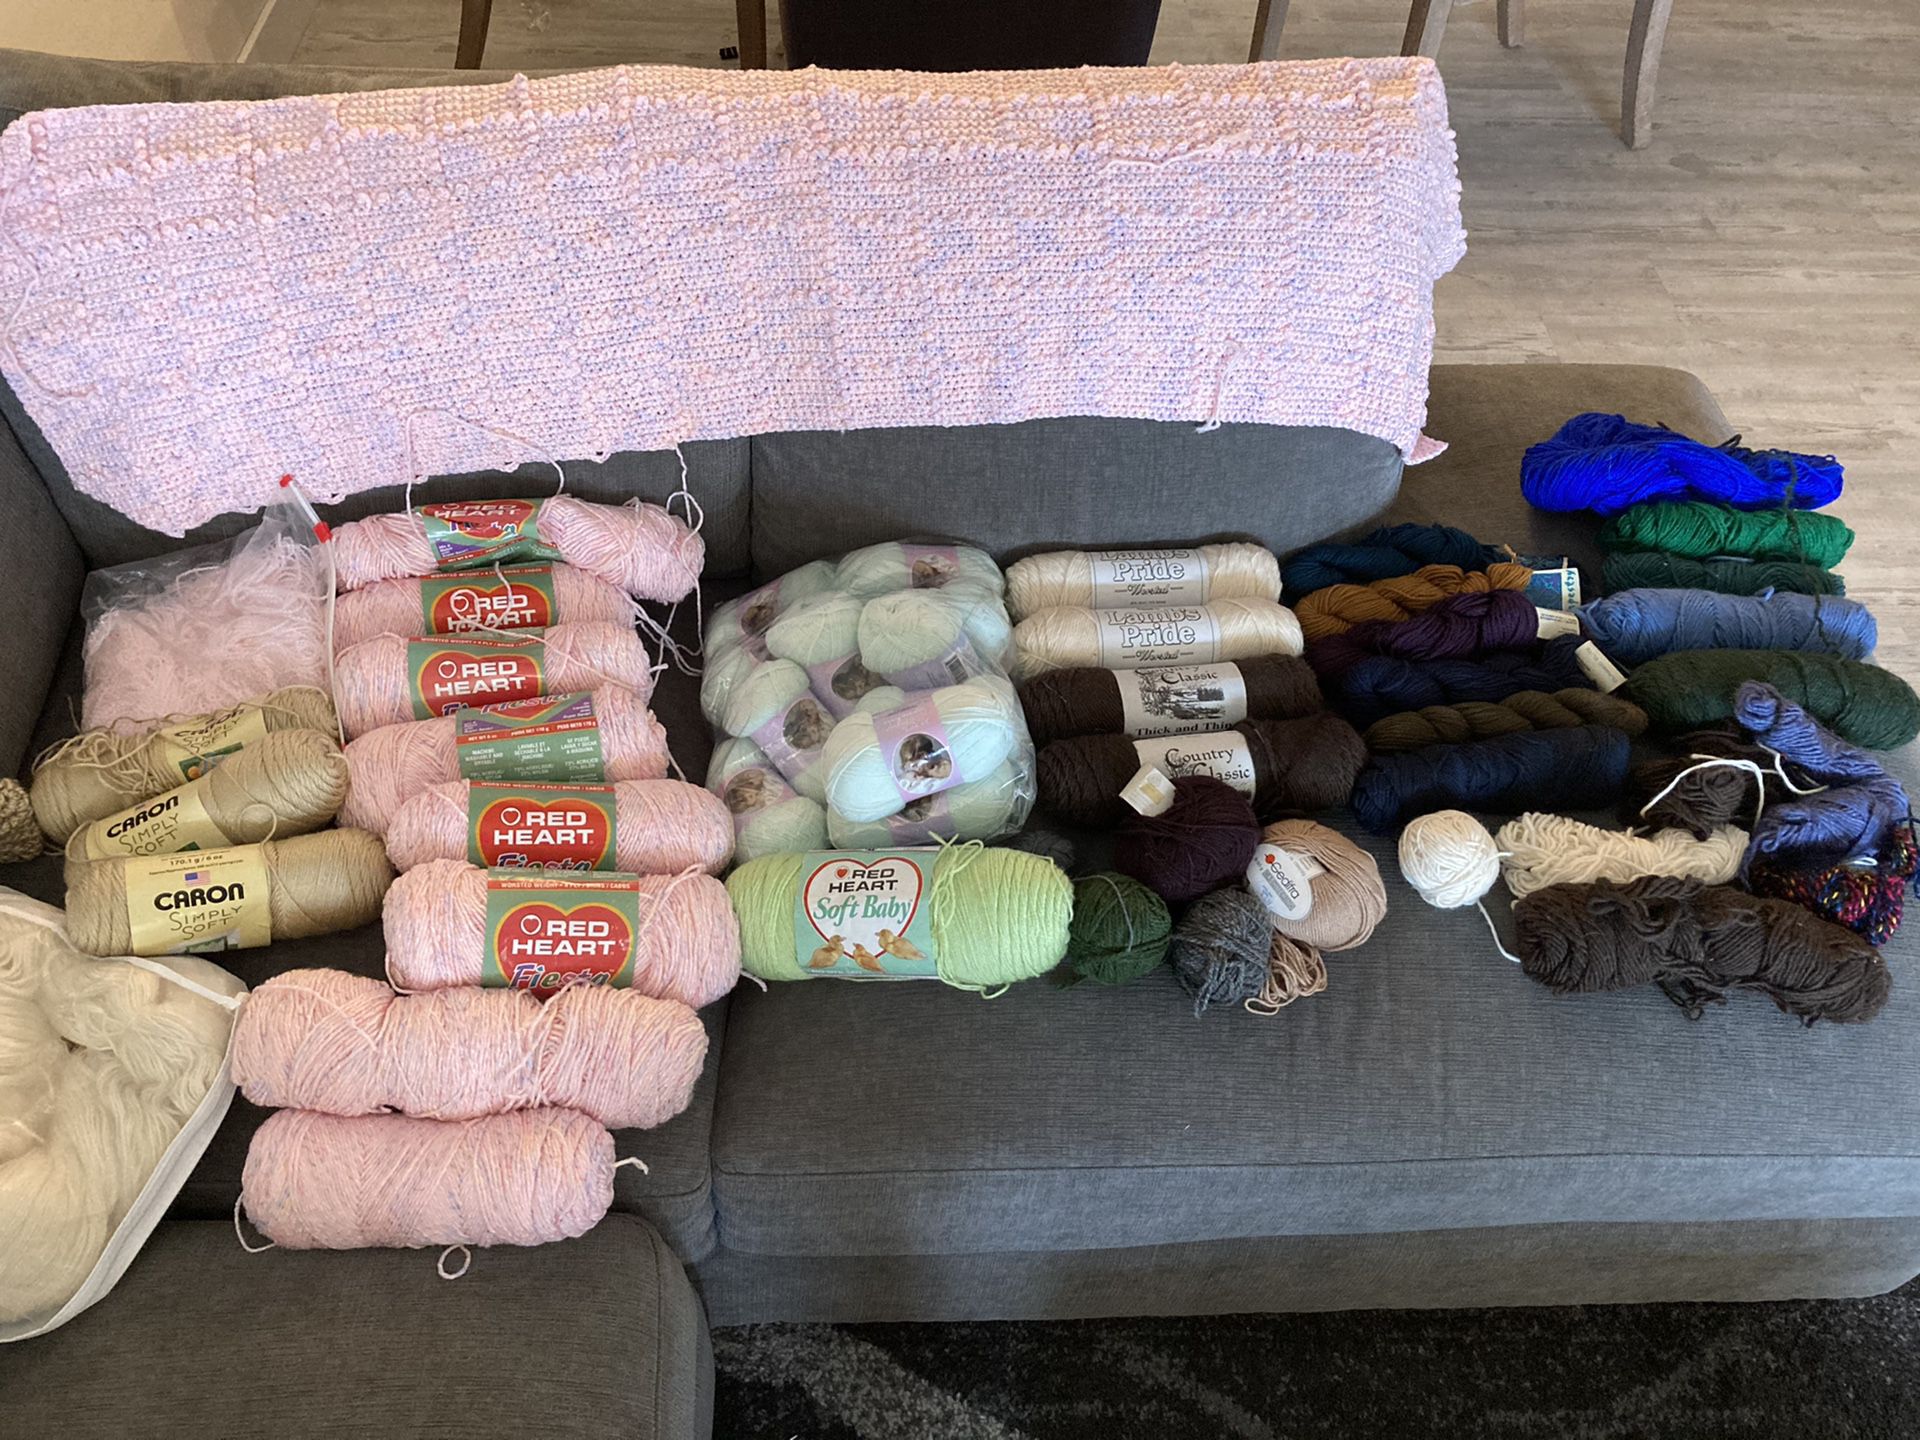 Nice collection of yarn